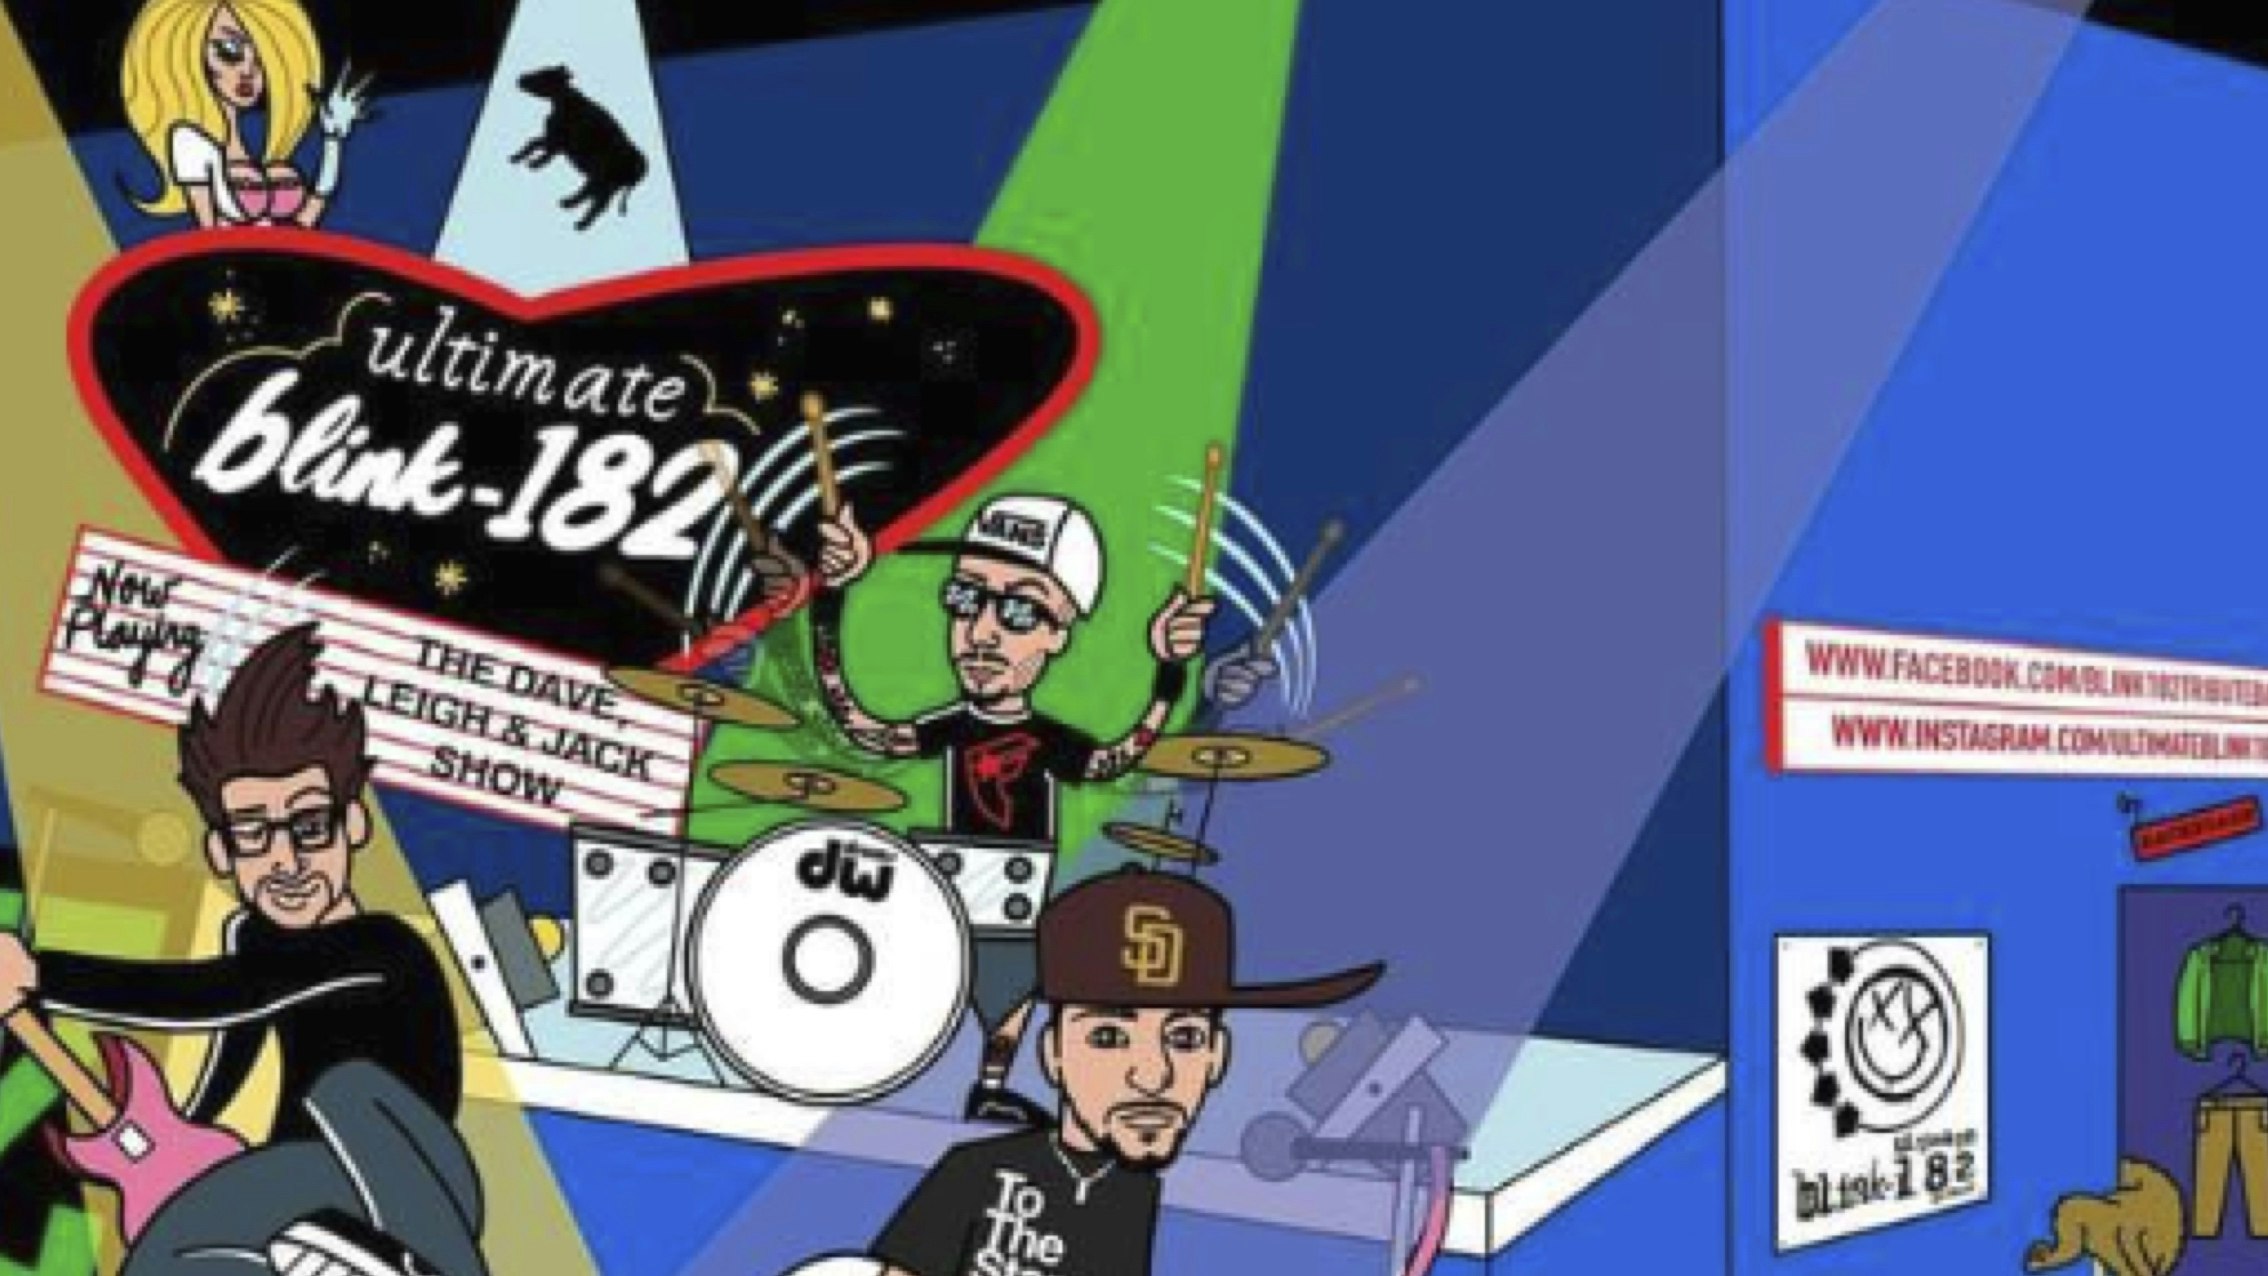 ULTIMATE BLINK 182 – a night dedicated to pop-punk legends Blink 182